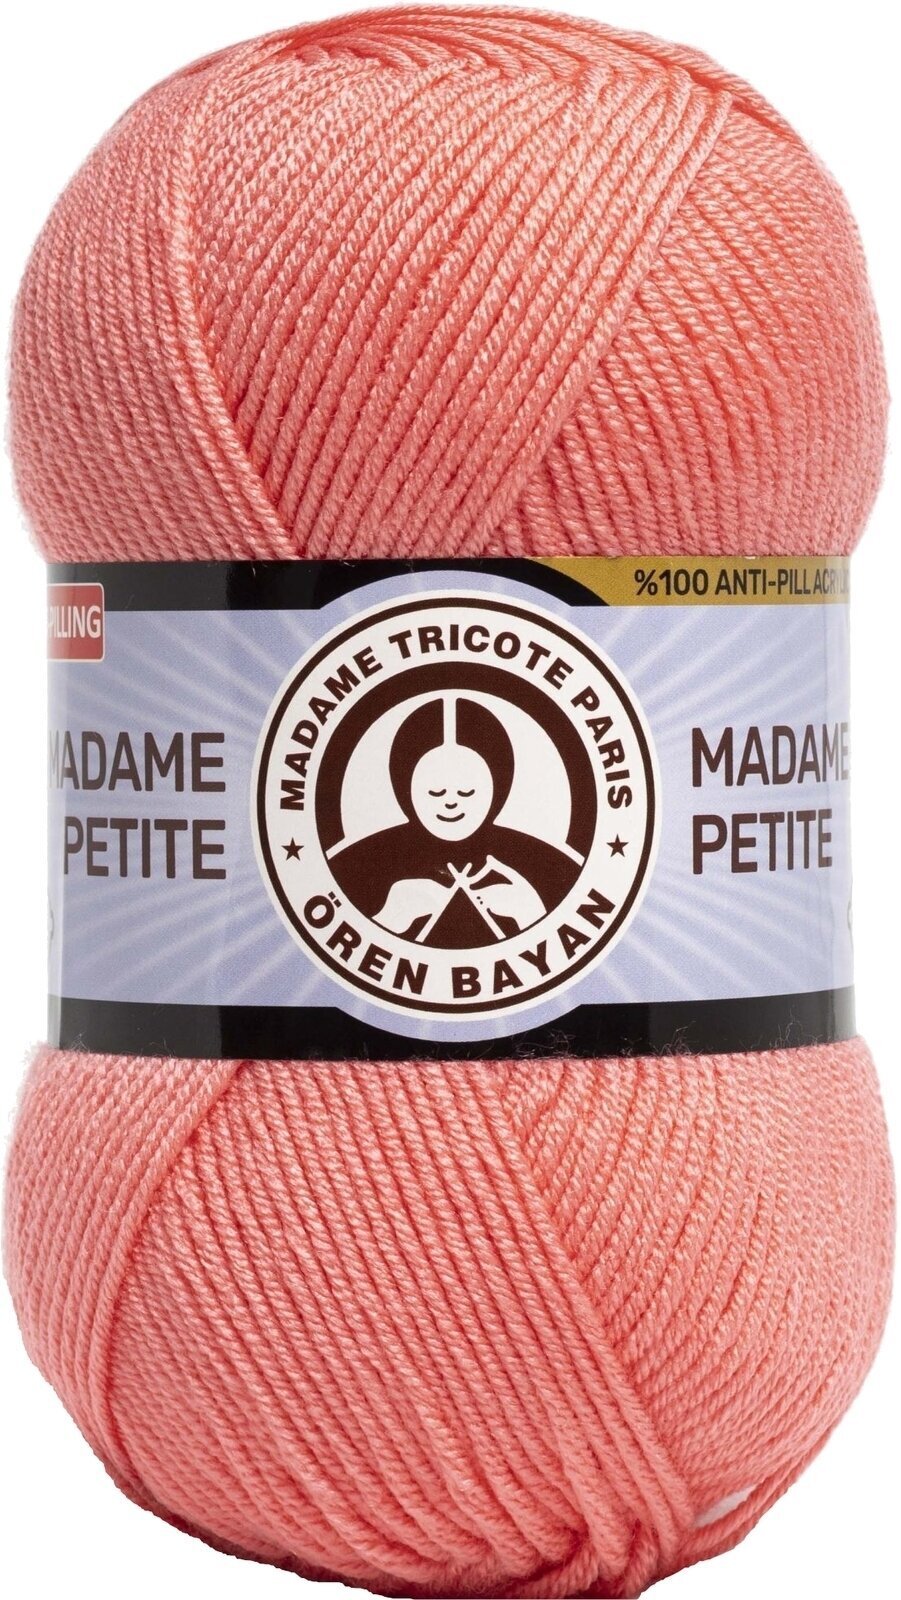 Knitting Yarn Madame Tricote Paris Madame Petite 3848 36 Knitting Yarn